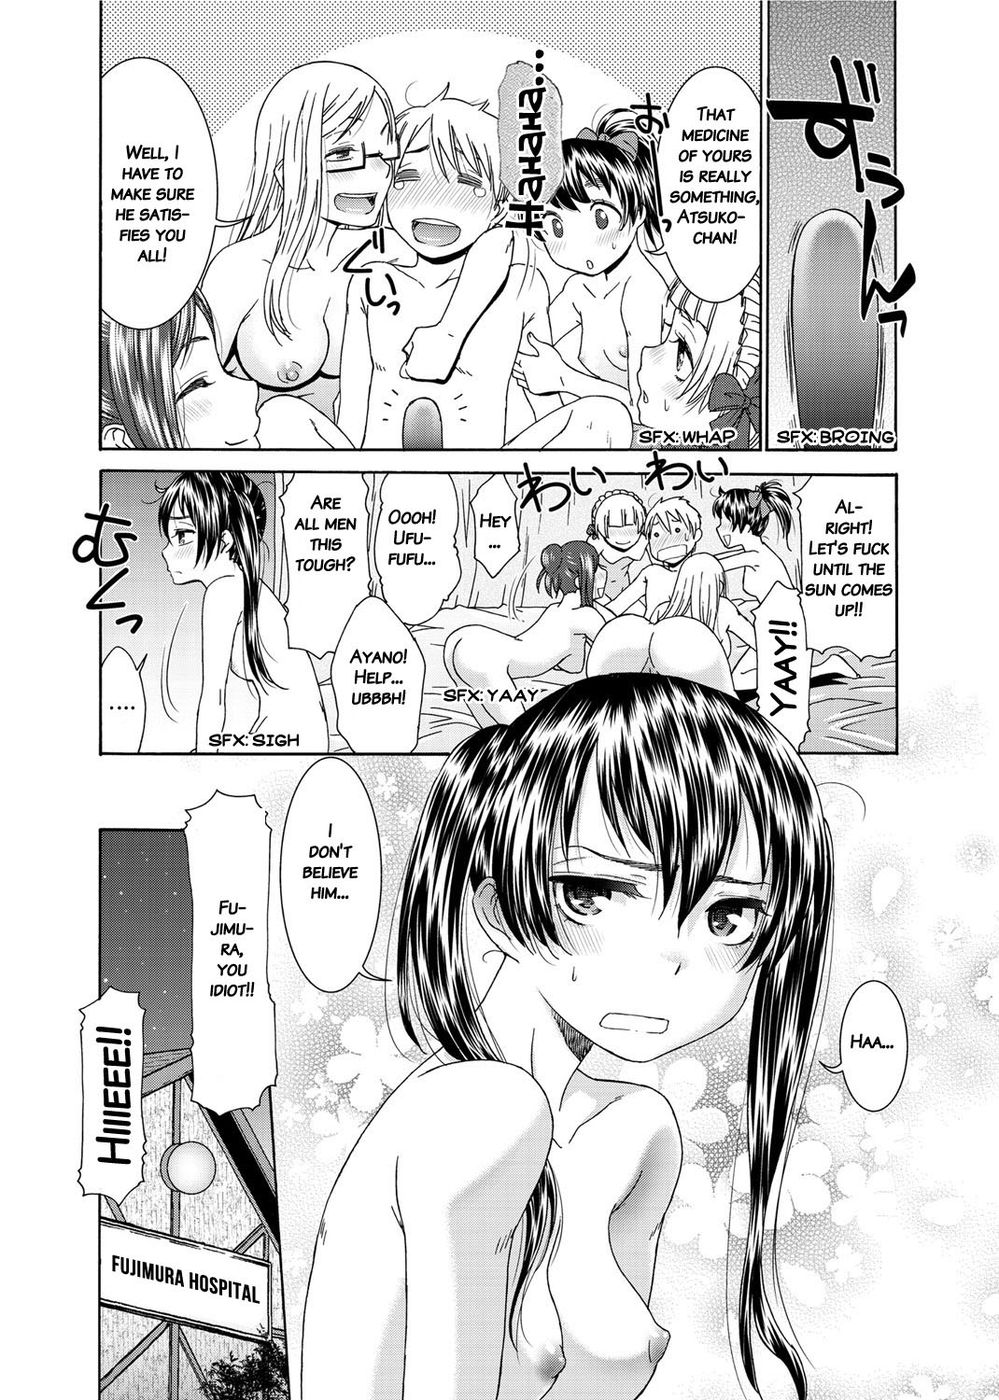 Hentai Manga Comic-Momoiro Nurse-Chapter 10 - The fujimura hospital's thorough examinations-22